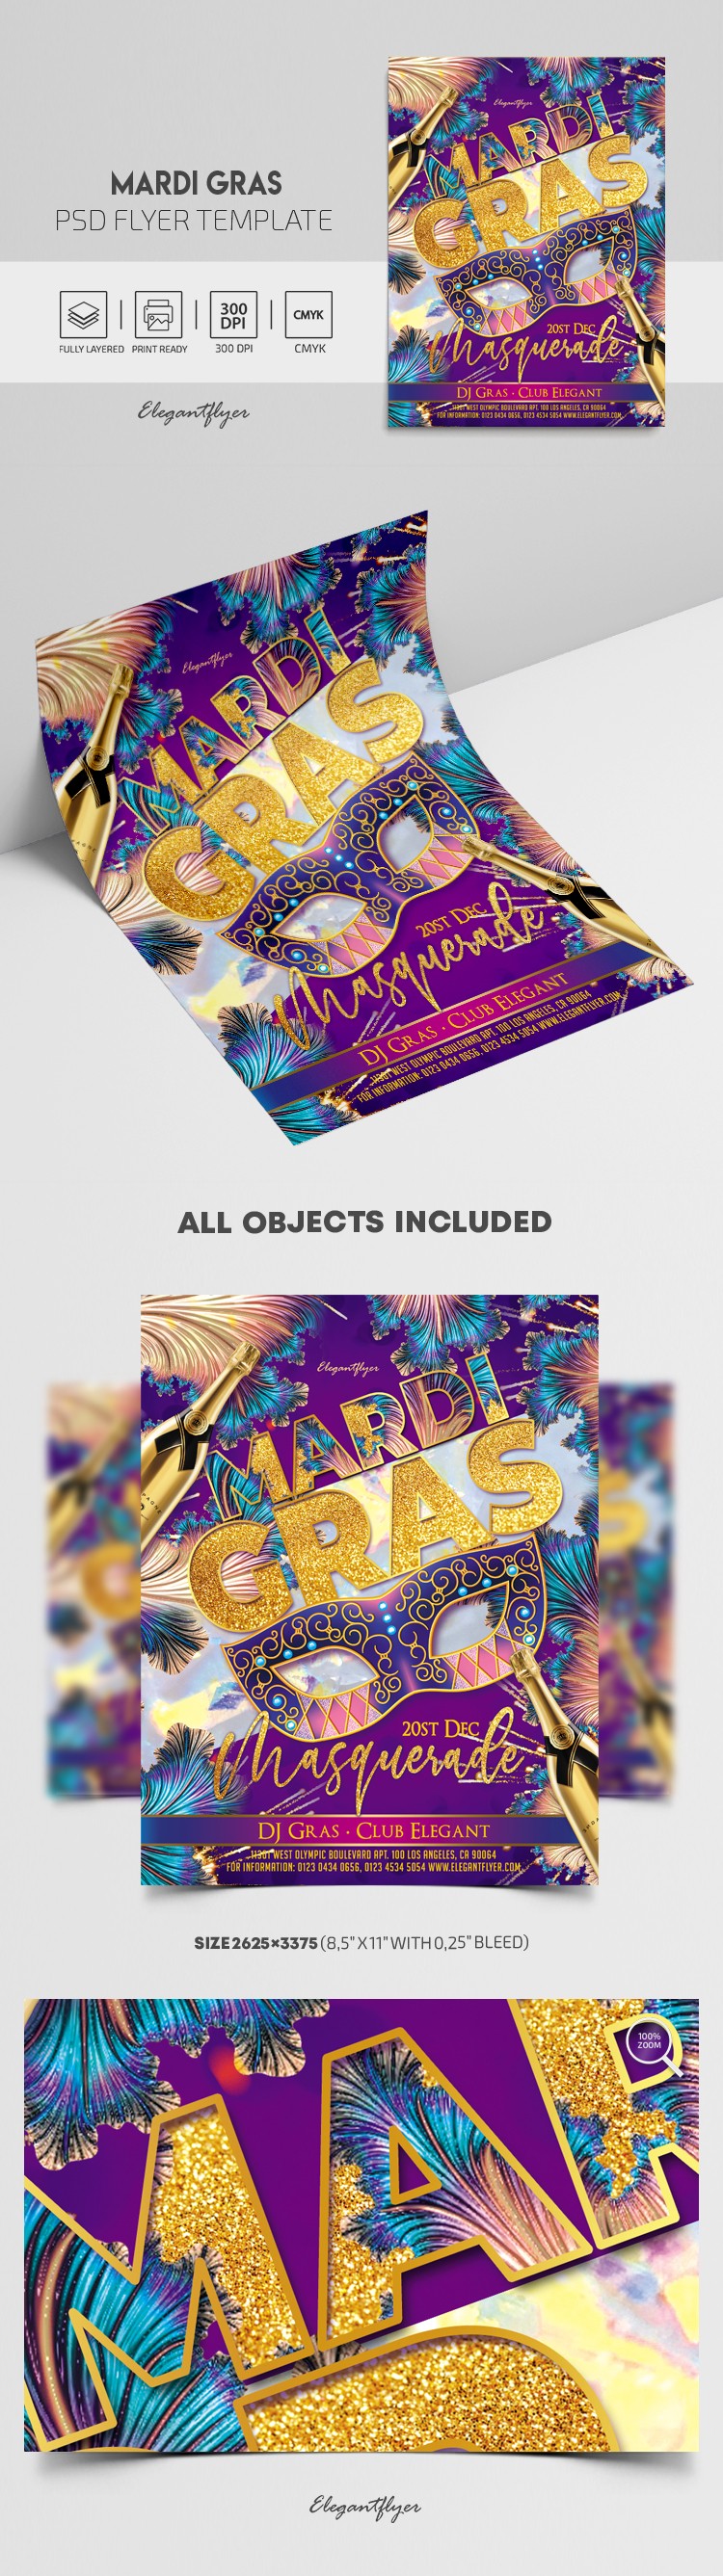 Mardi Gras Flyer by ElegantFlyer